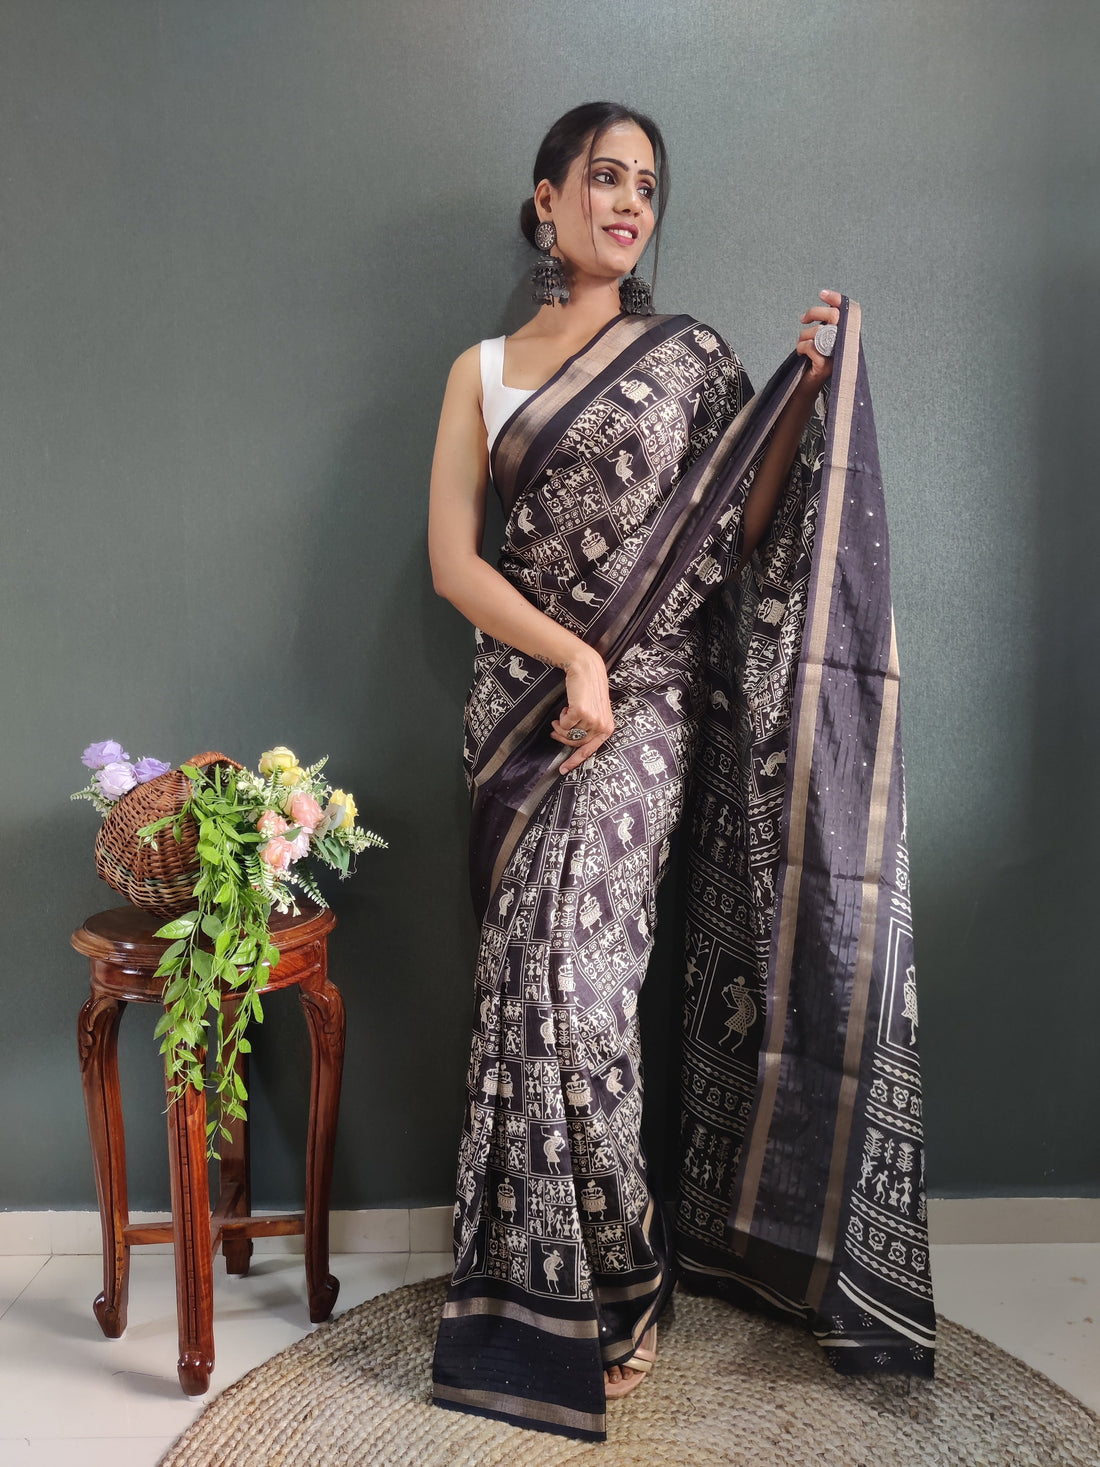 1-Min Ready To Wear Latest Shriivanta Design Saree – Black